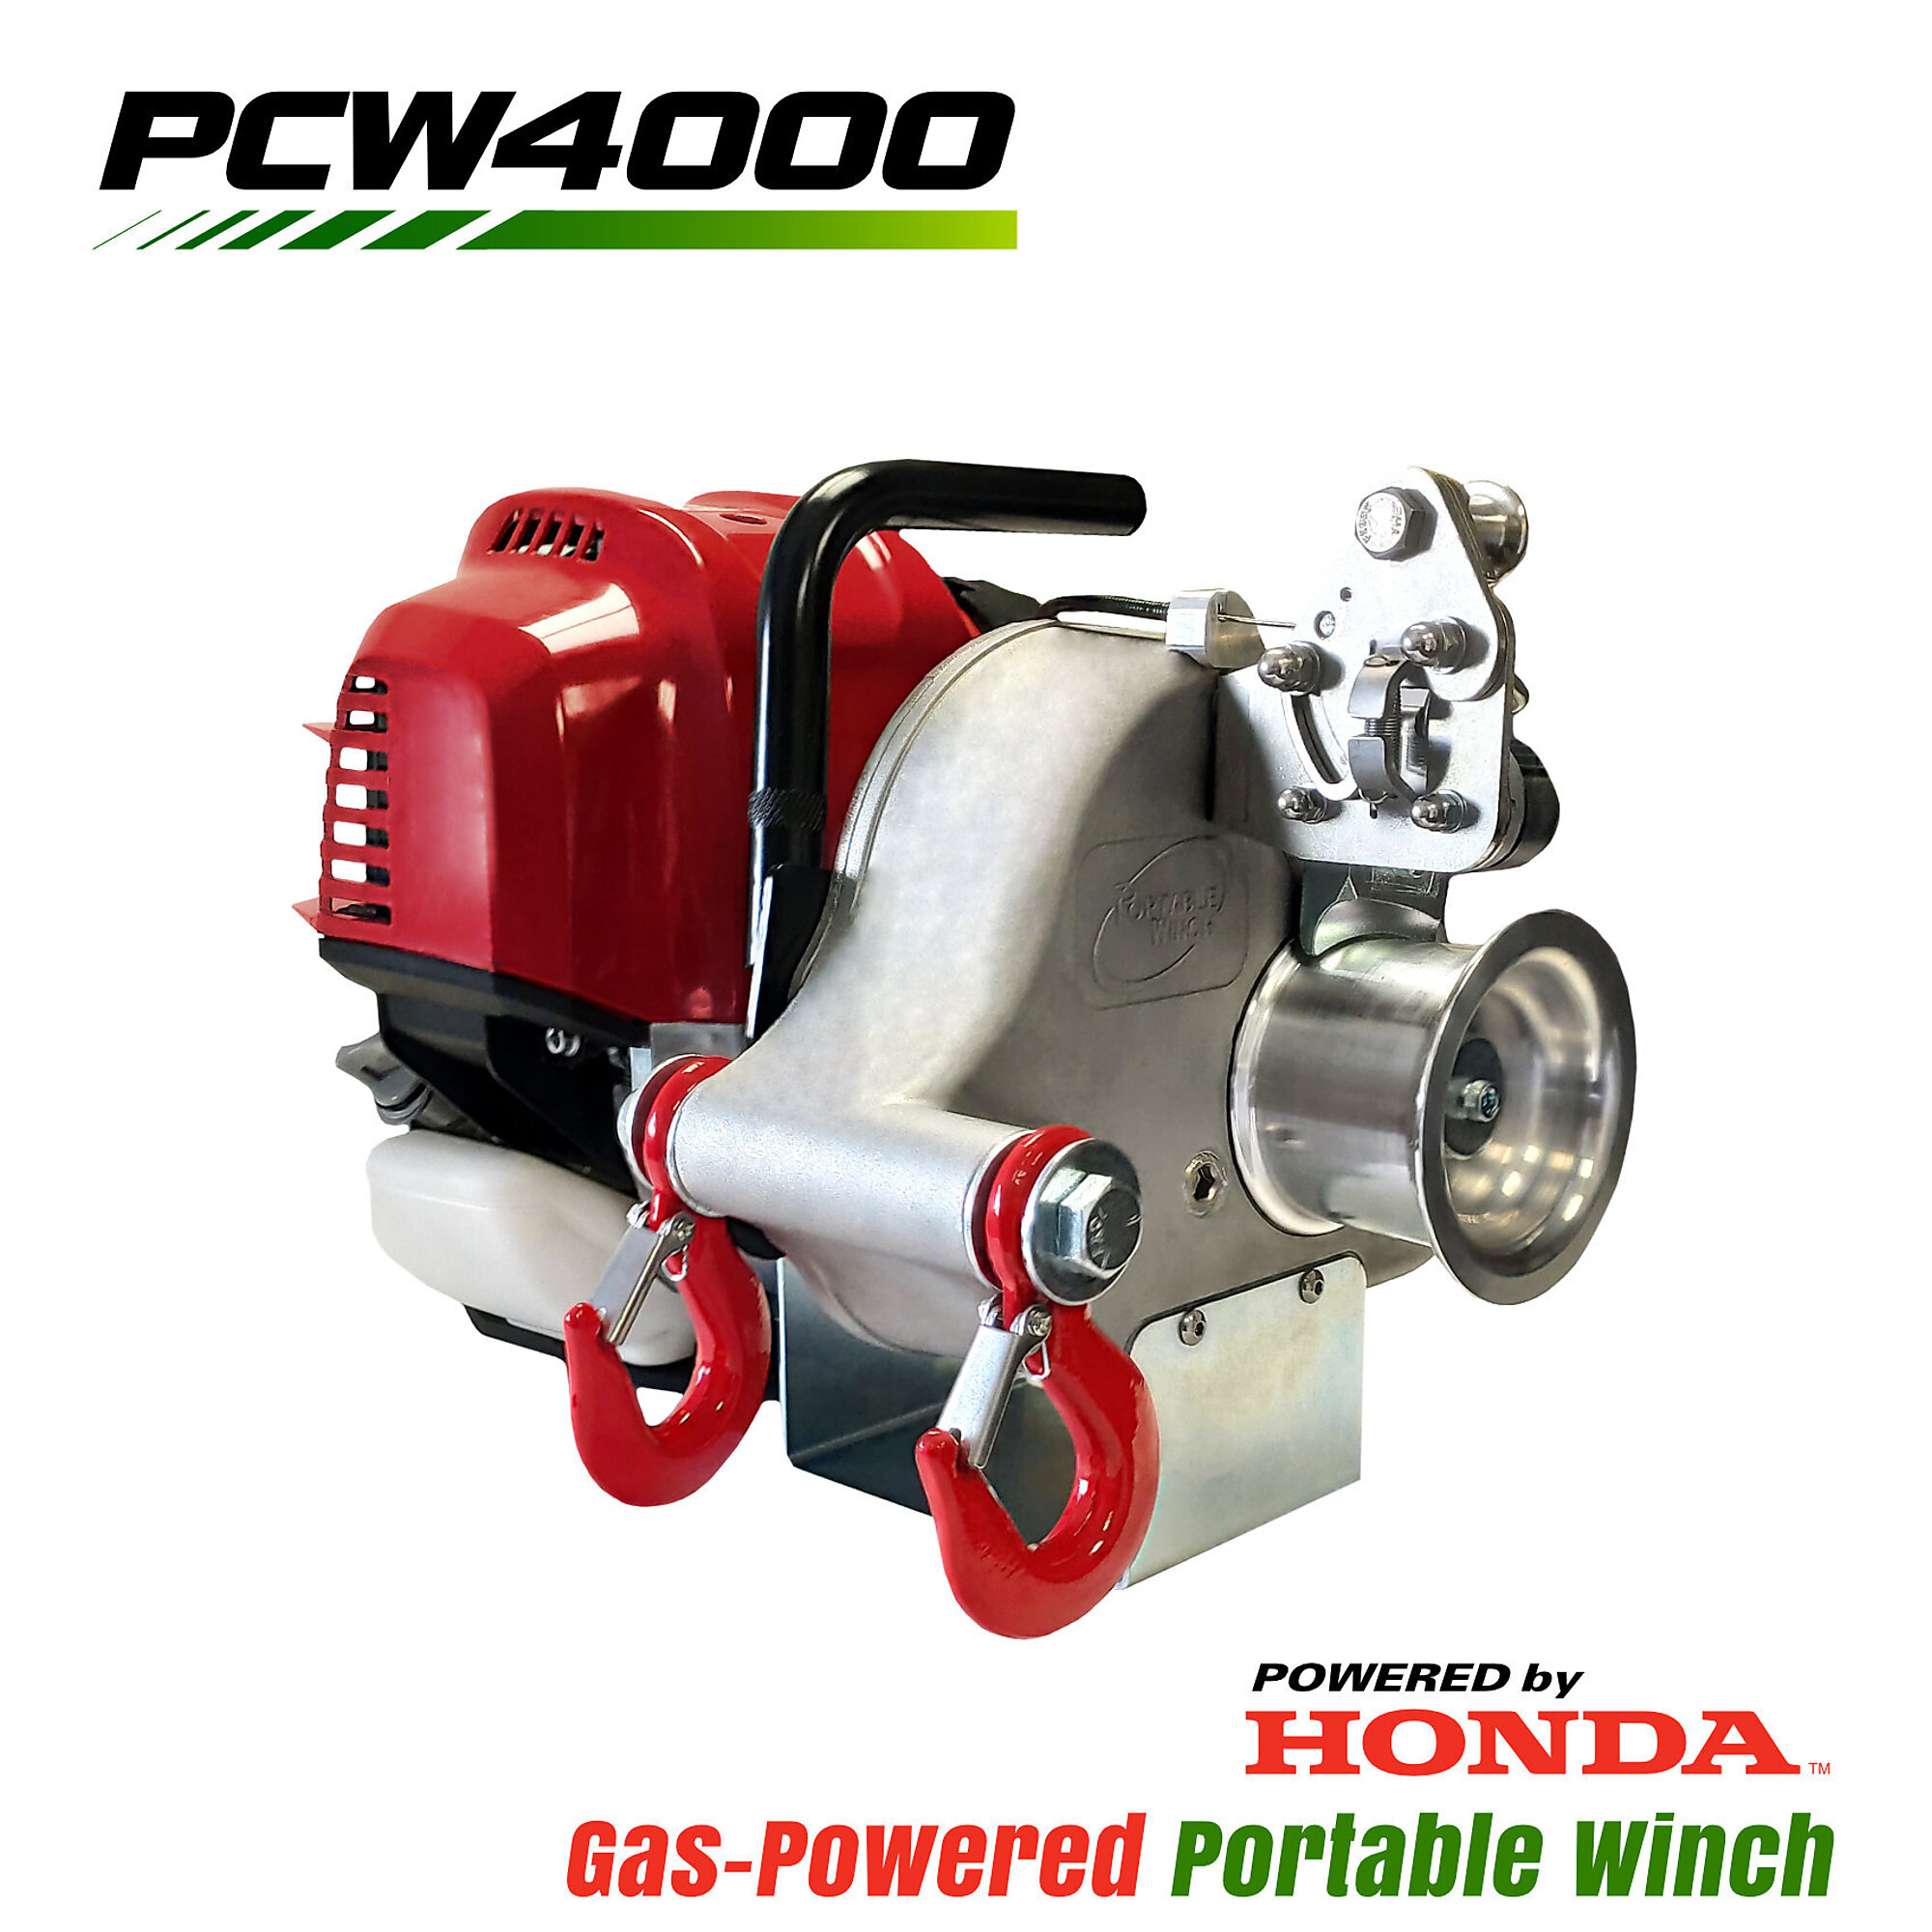 Portable Winch, Gas Pulling Winch - Honda GX50 Capacity (Line Pull) 2200 lb, Model PCW4000